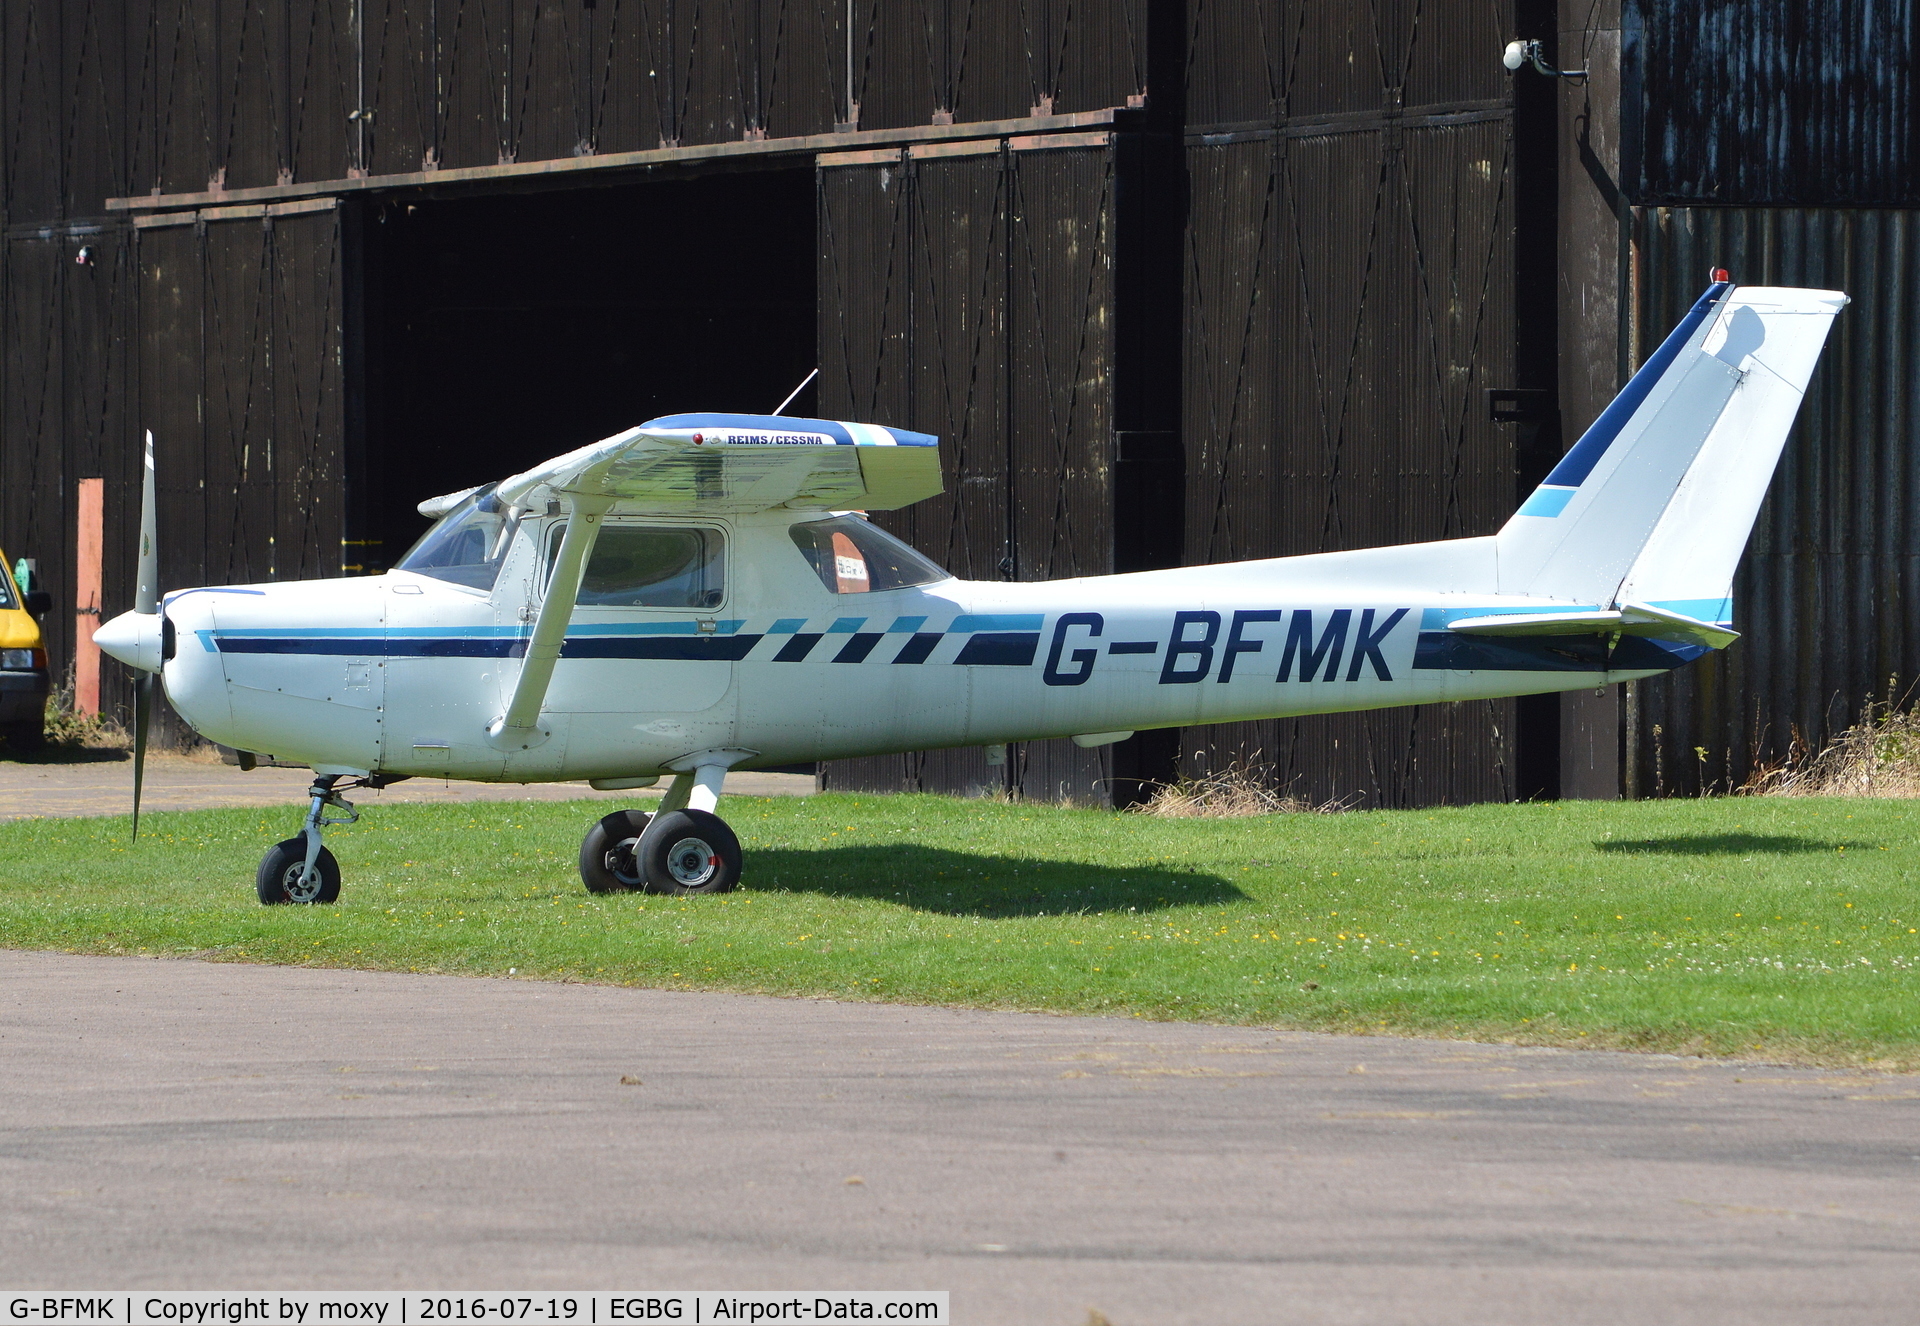 G-BFMK, 1978 Reims FA152 Aerobat C/N 0344, Reims Cessna F152 at Leicester Airport.